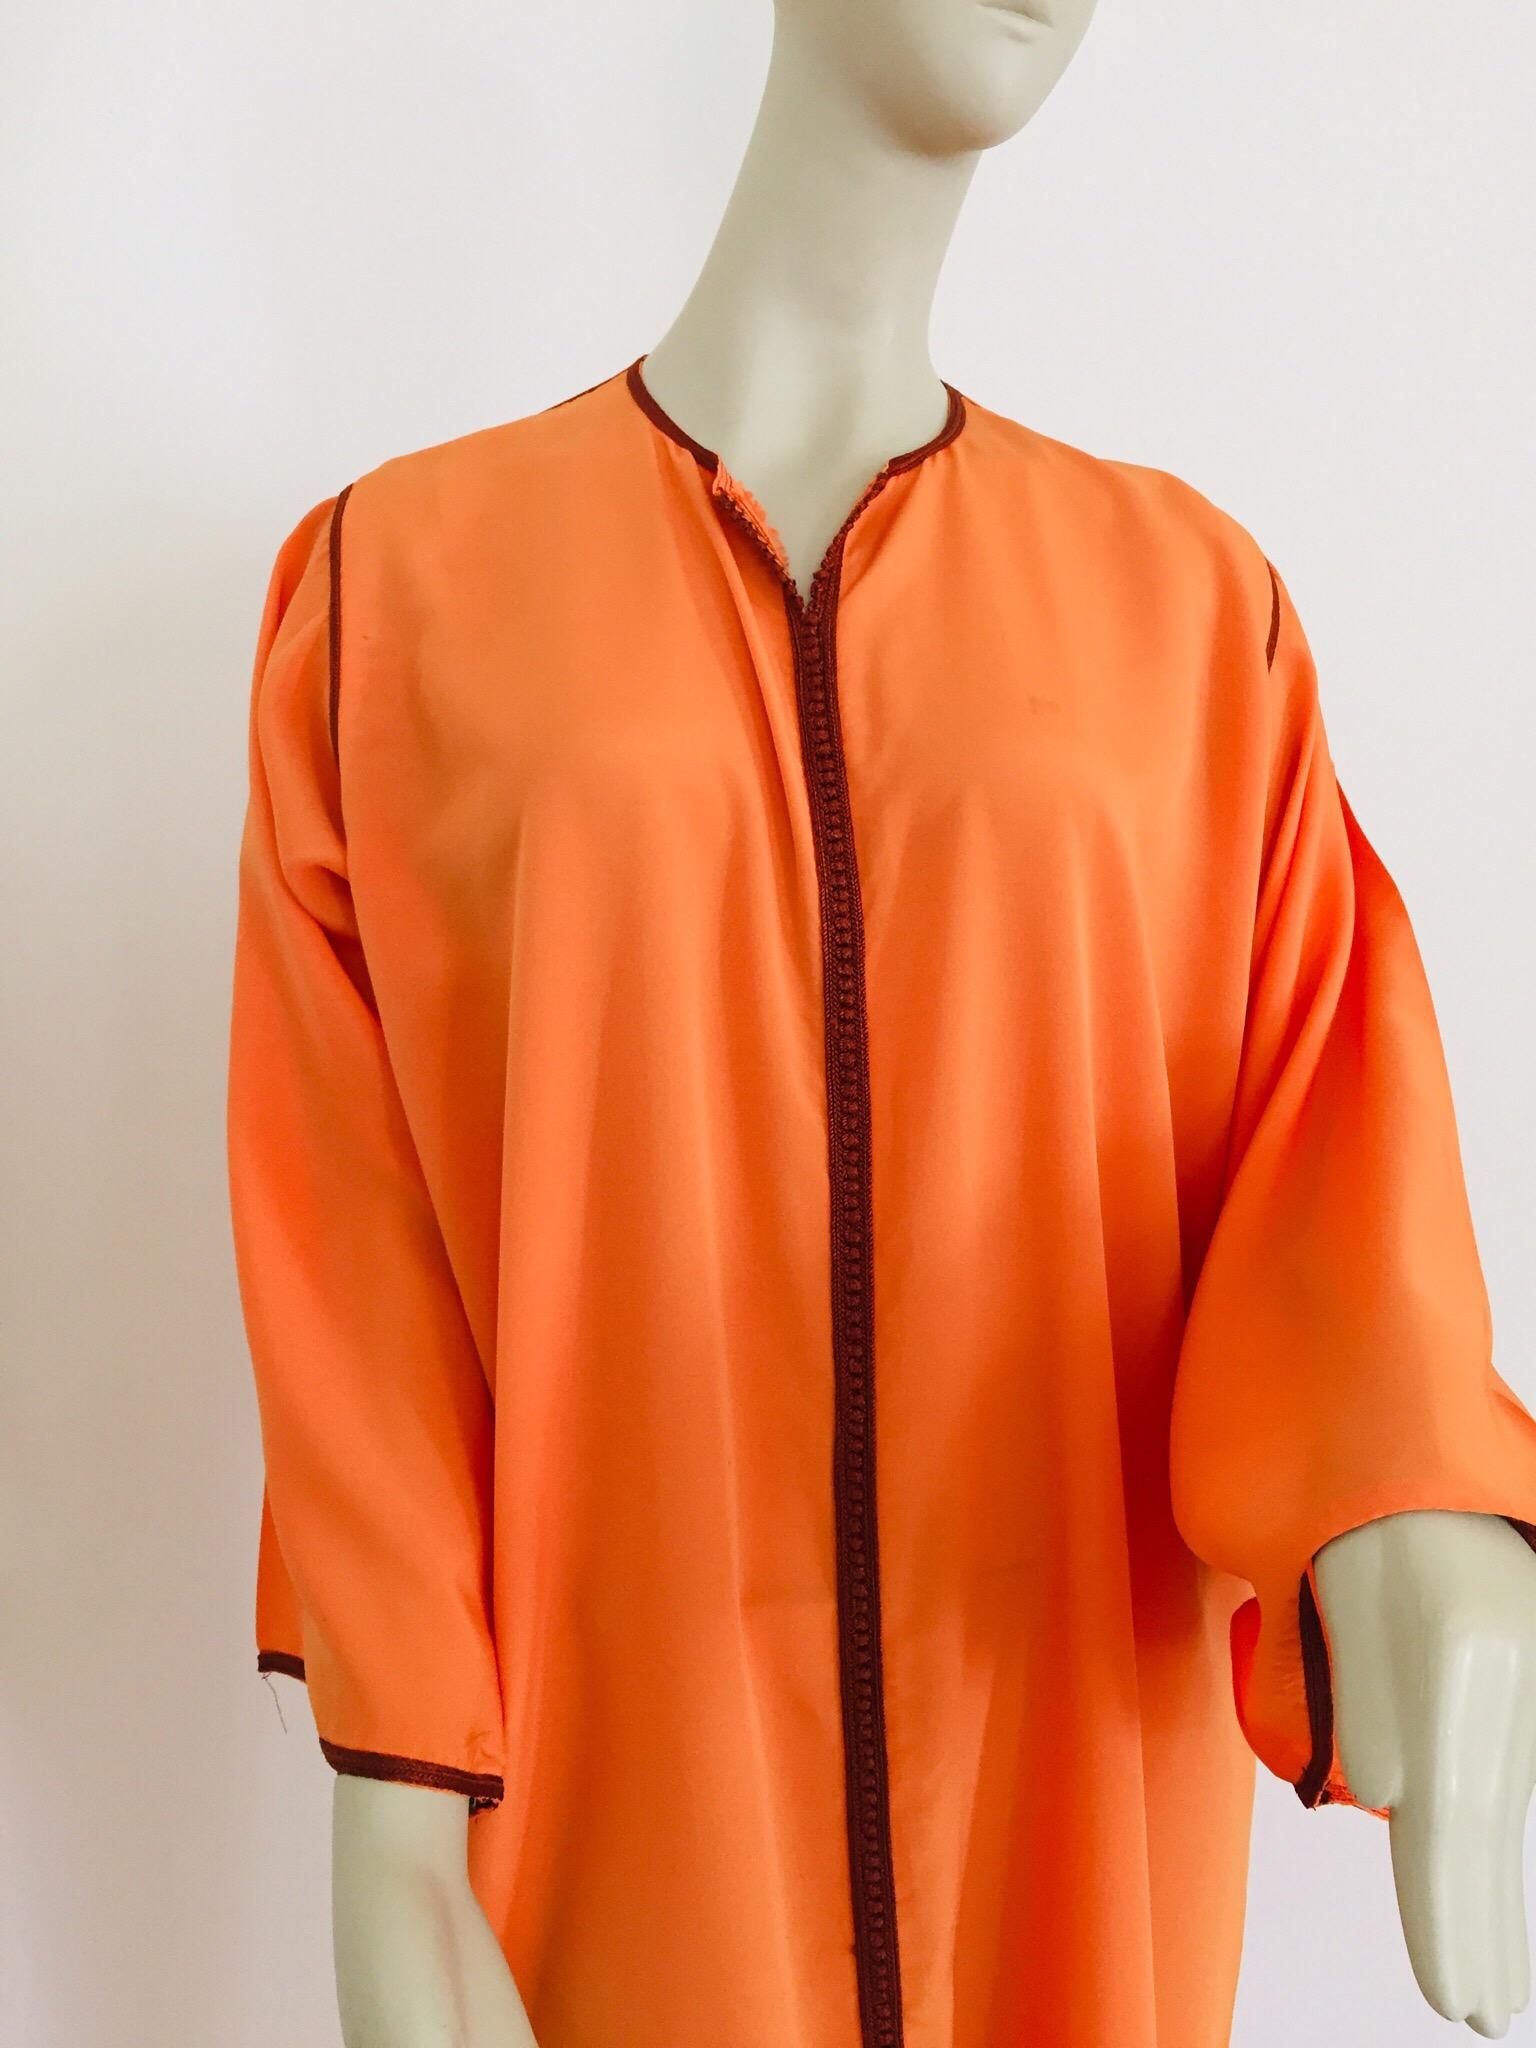 Moorish Moroccan Orange Kaftan Maxi Dress Caftan Size Large For Sale